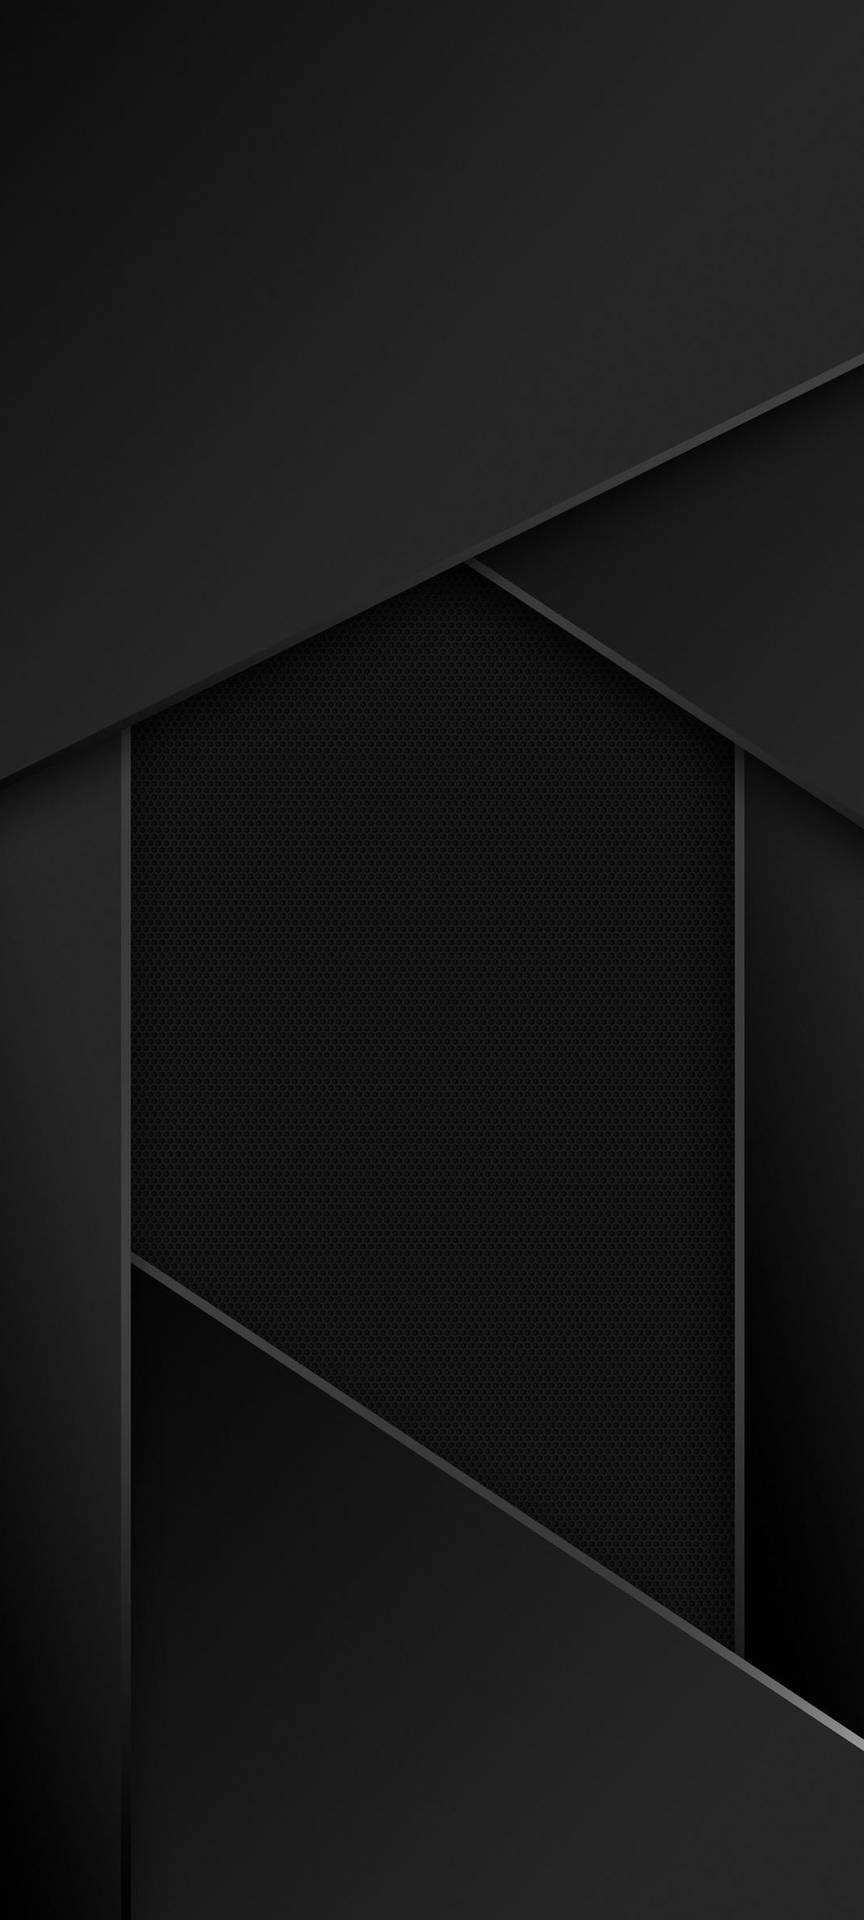 Black Iphone Metallic Background